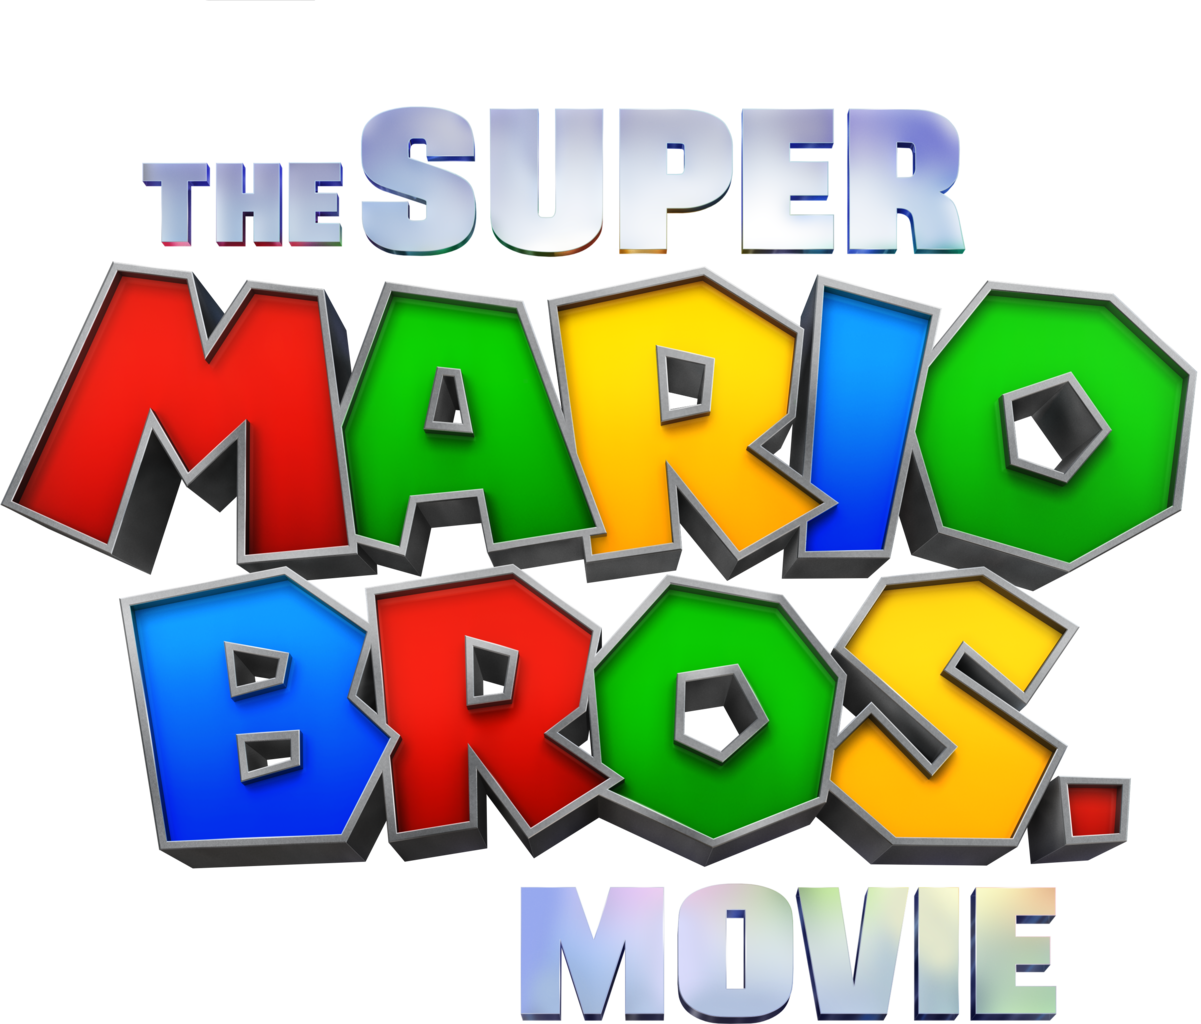 Super Mario Bros logo